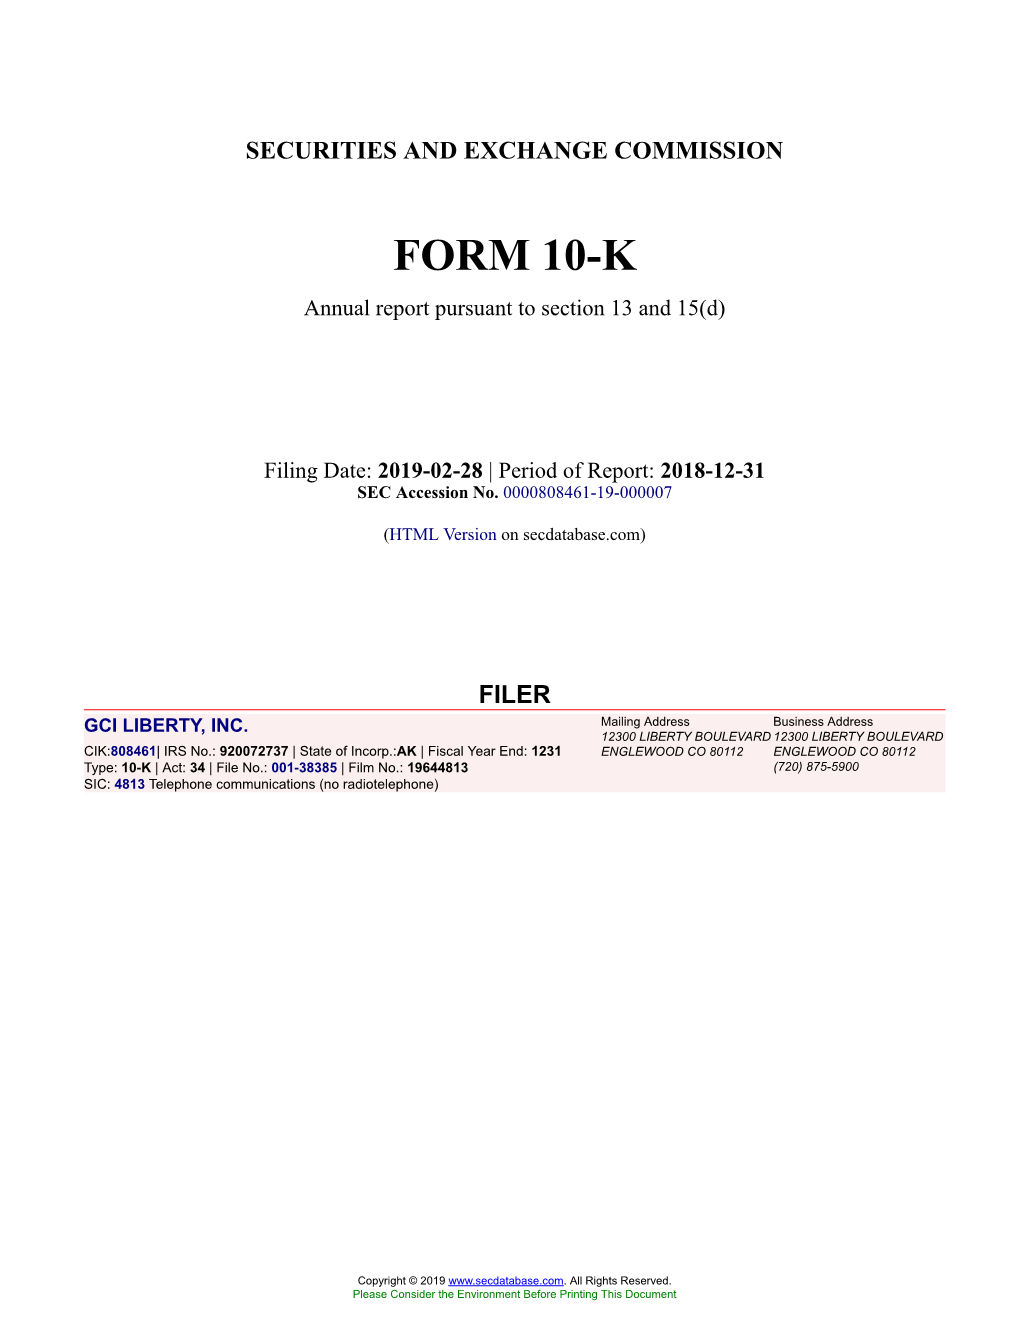 GCI LIBERTY, INC. Form 10-K Annual Report Filed 2019-02-28